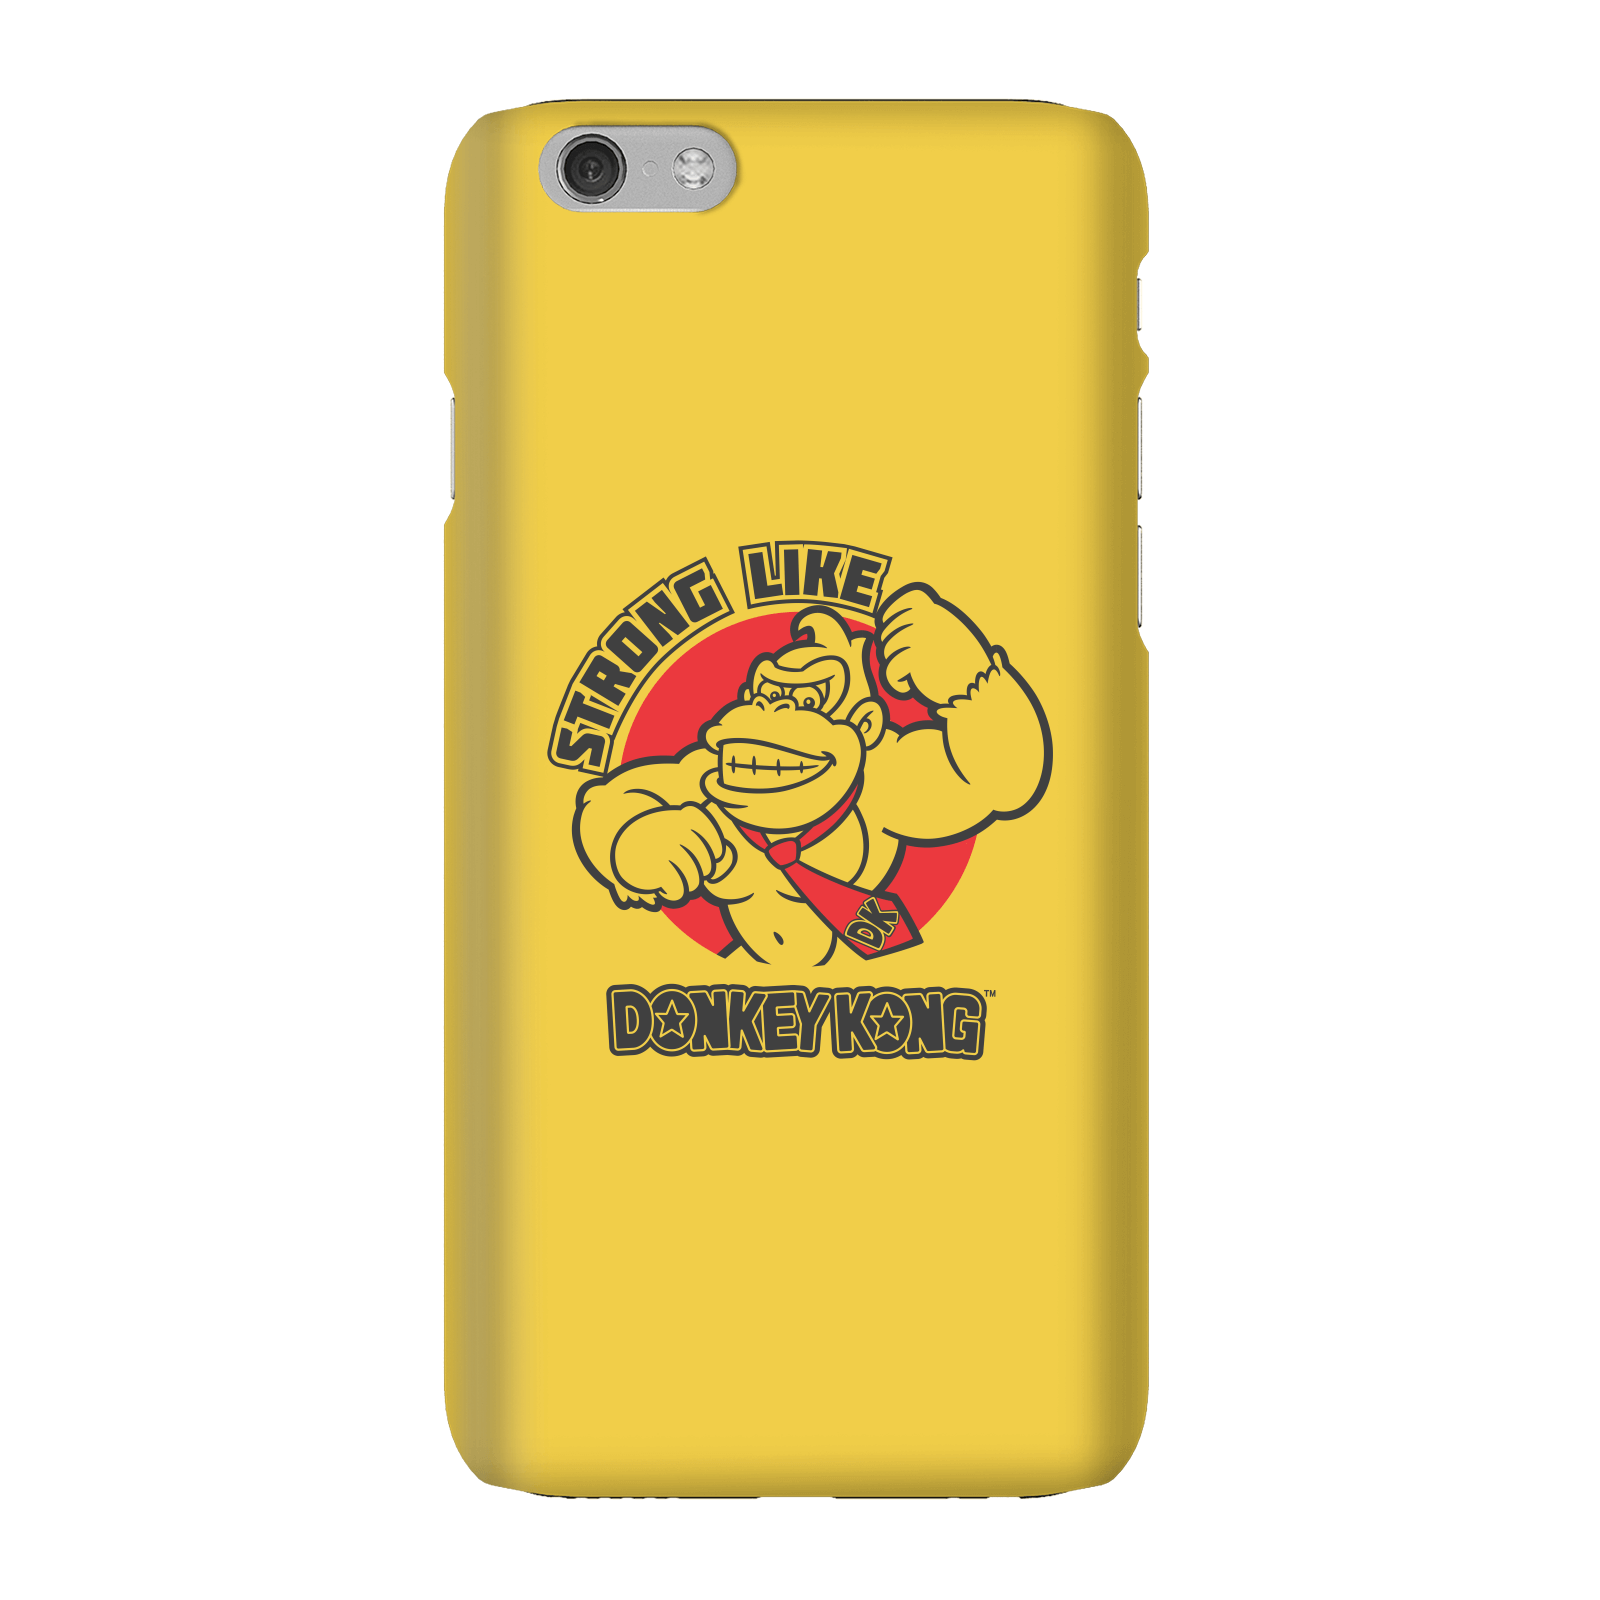 Nintendo Donkey Kong Strong Like Donkey Kong Phone Case - iPhone 6 - Snap Case - Gloss